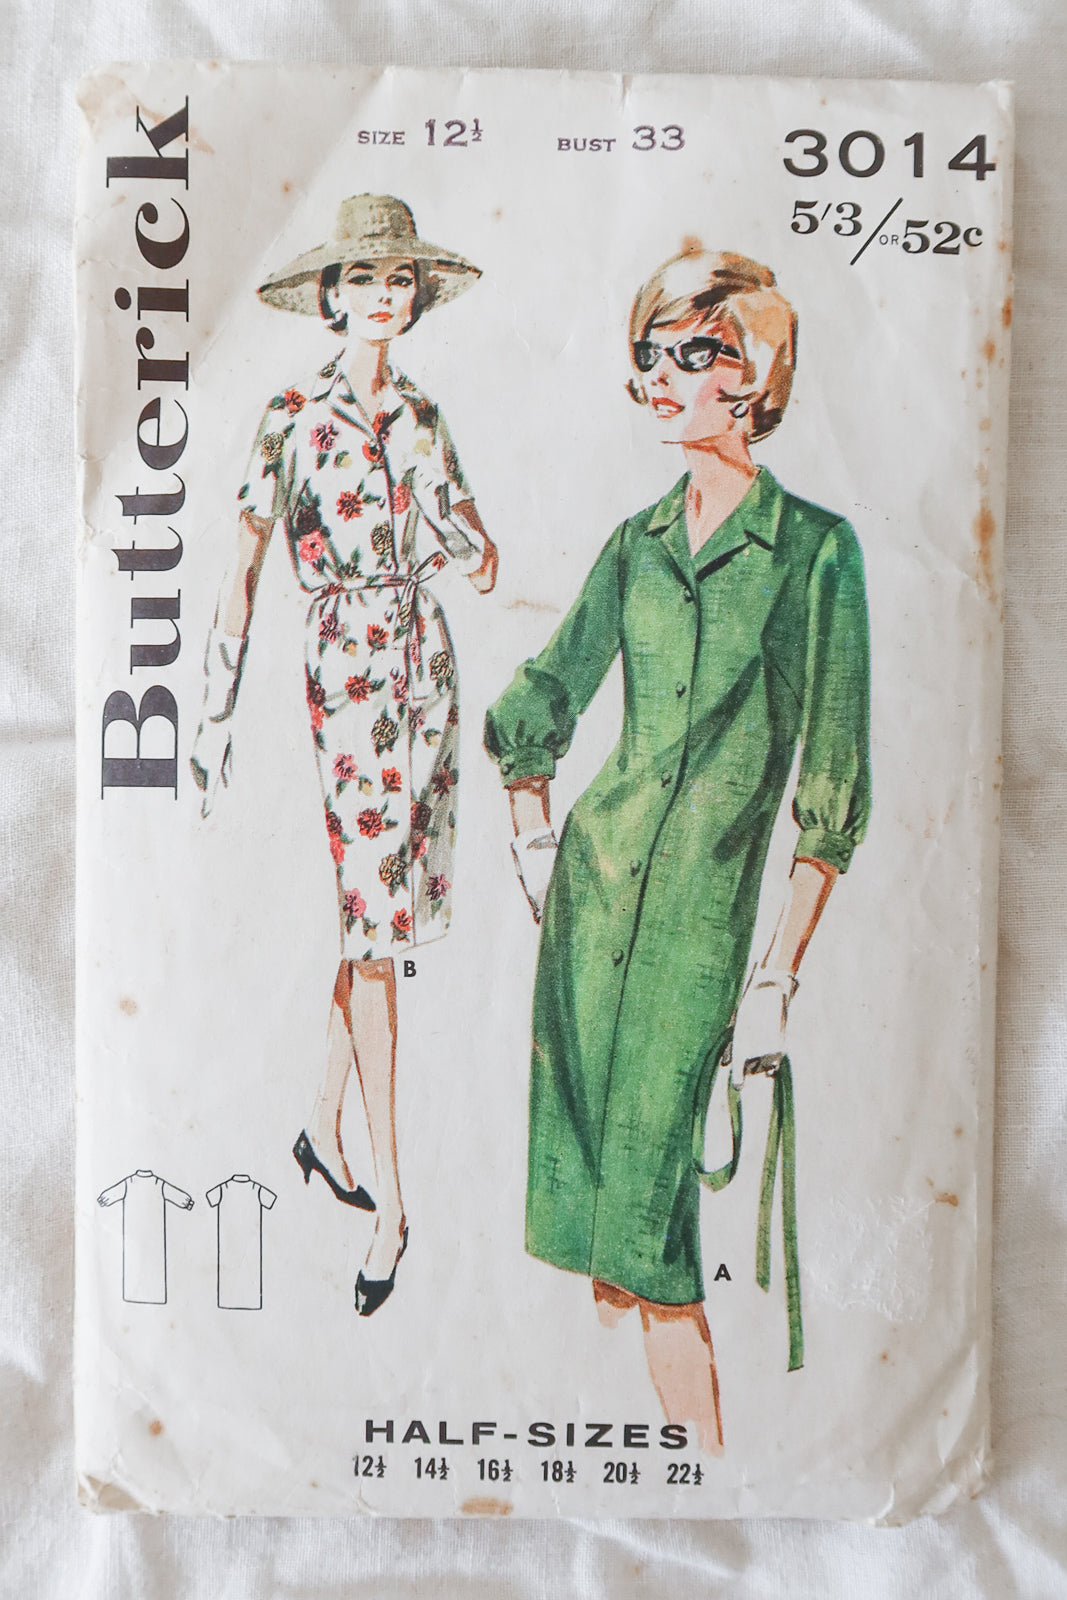 Butterick 3014 1960s Sewing Pattern